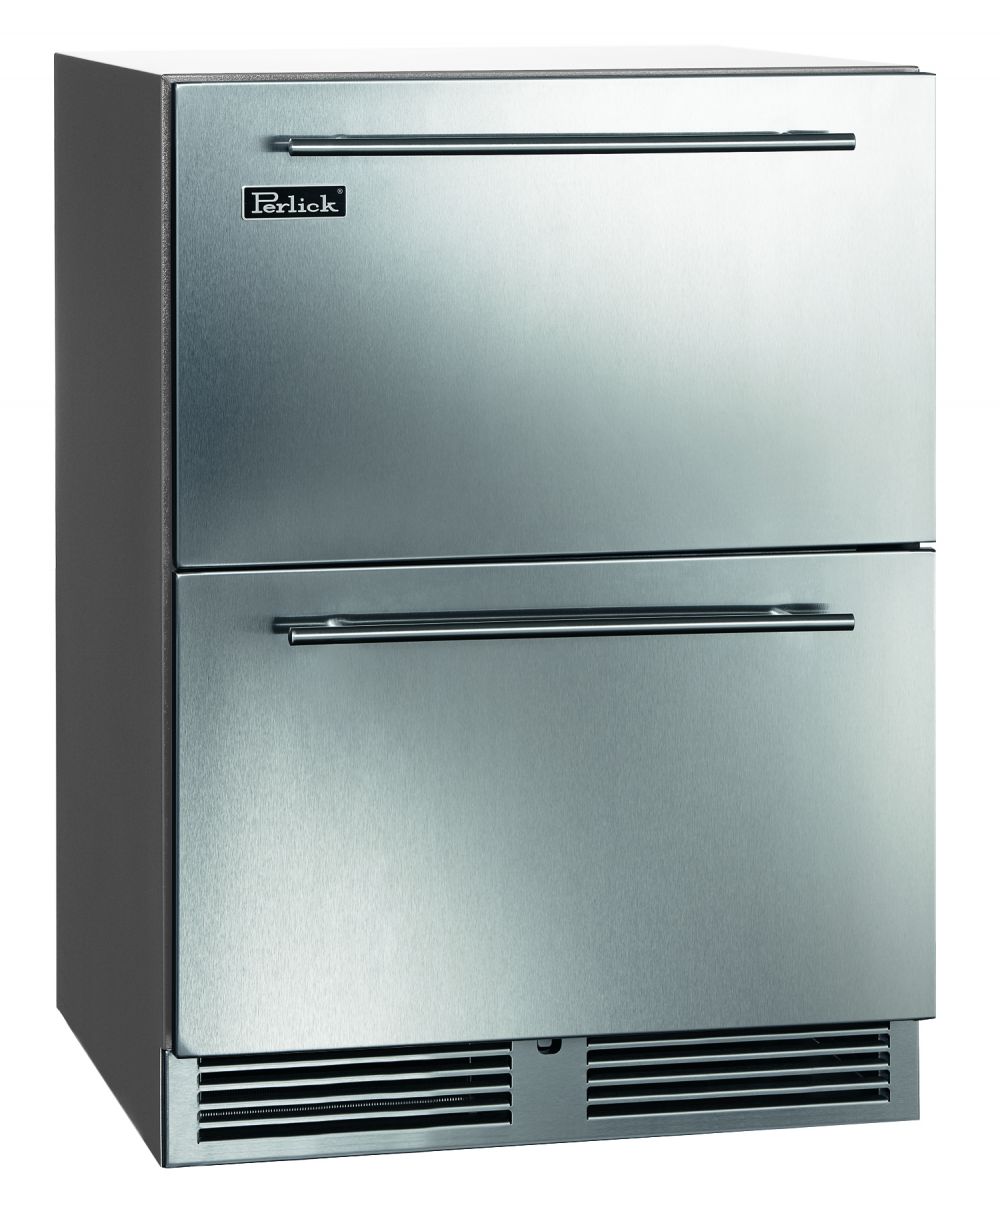 Perlick HC24RB46 24" Refrigerator